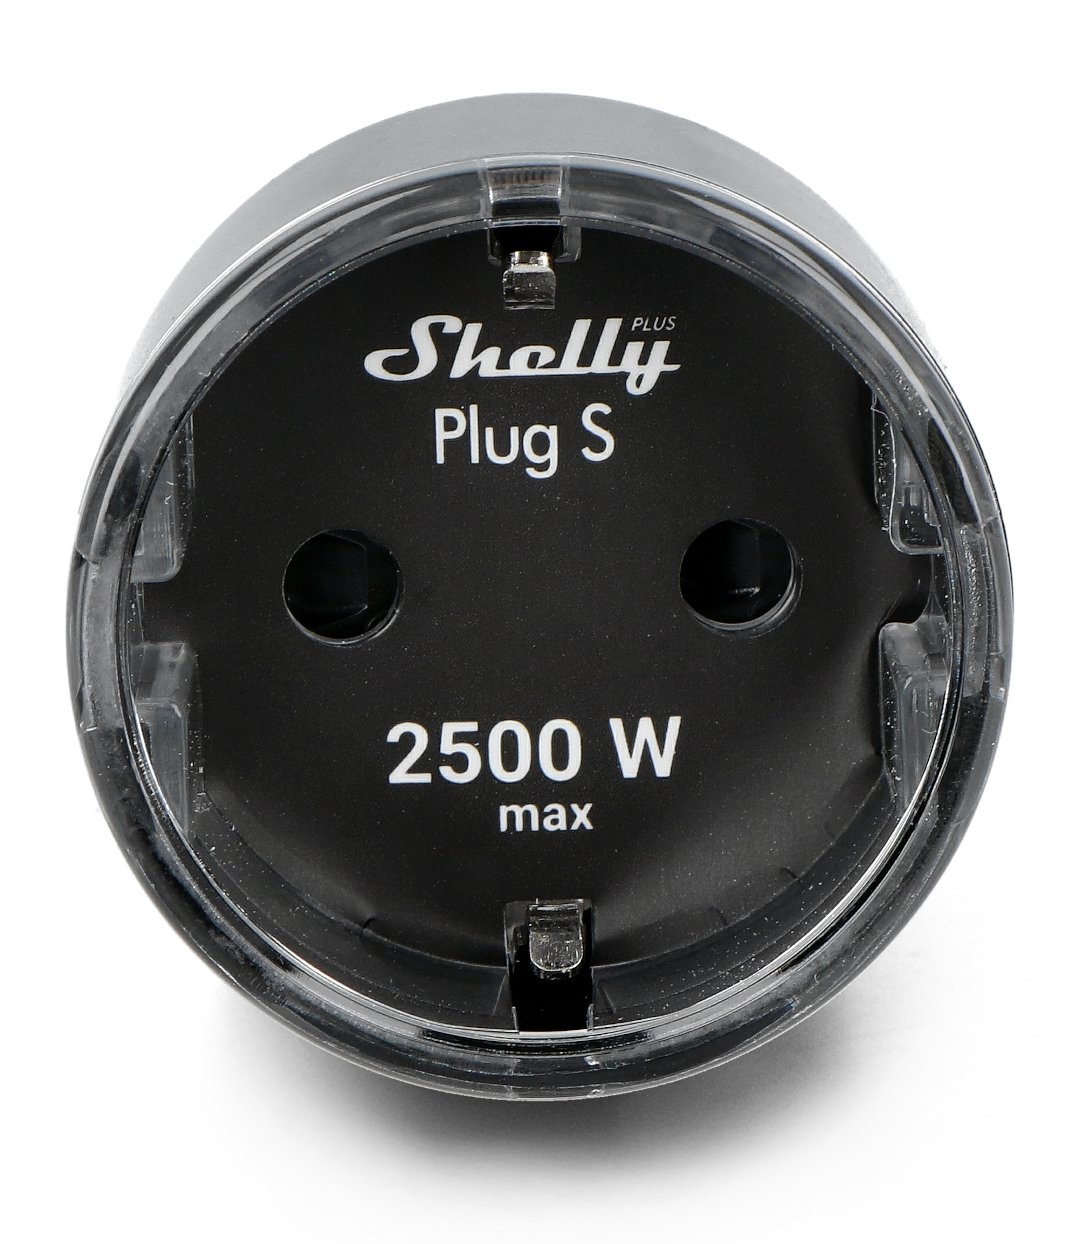 Shelly Plus Plug S - smart plug WiFi 2500W - Black Botland - Robotic Shop